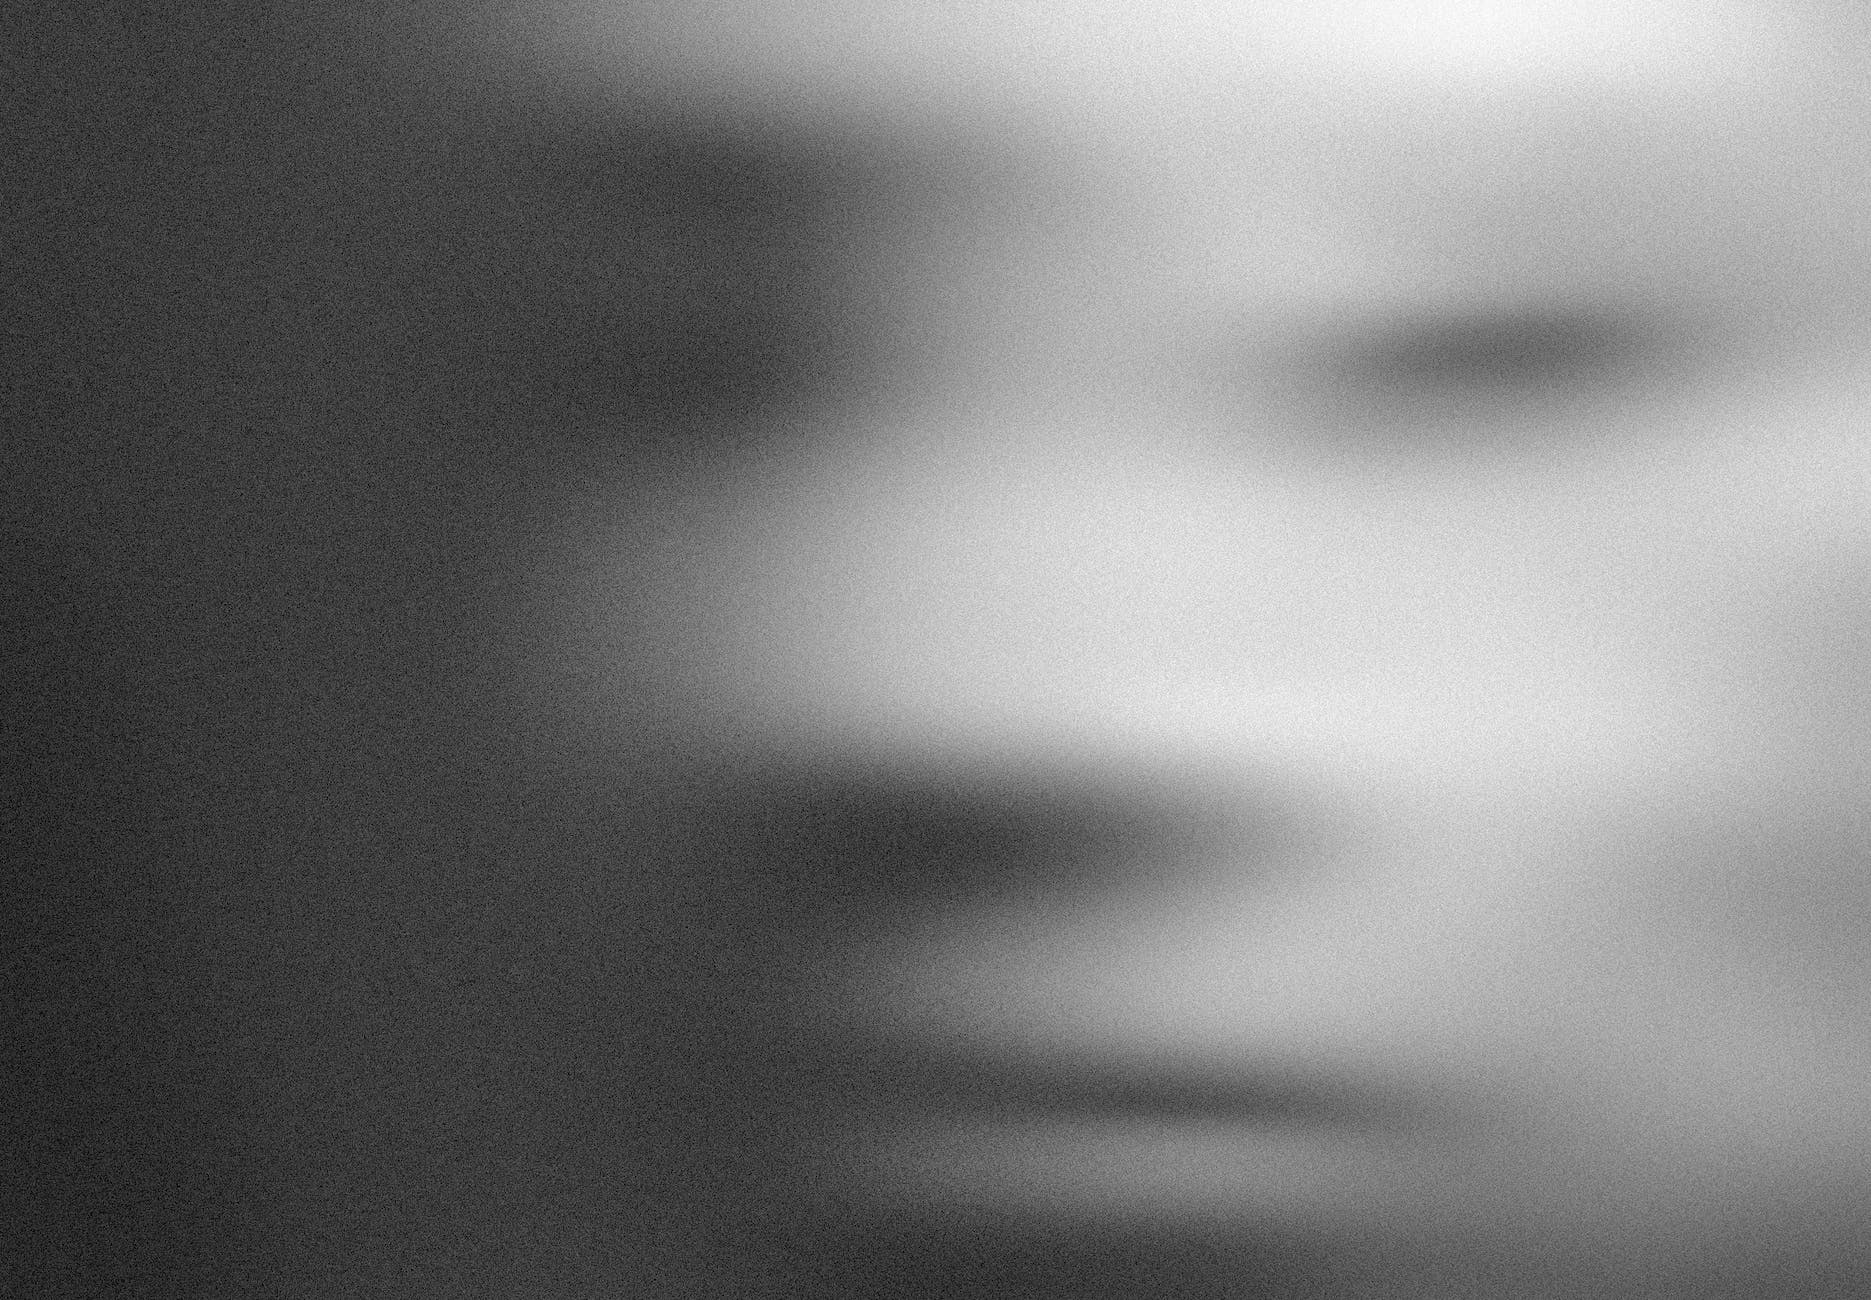 Blurry Grayscale Portrait